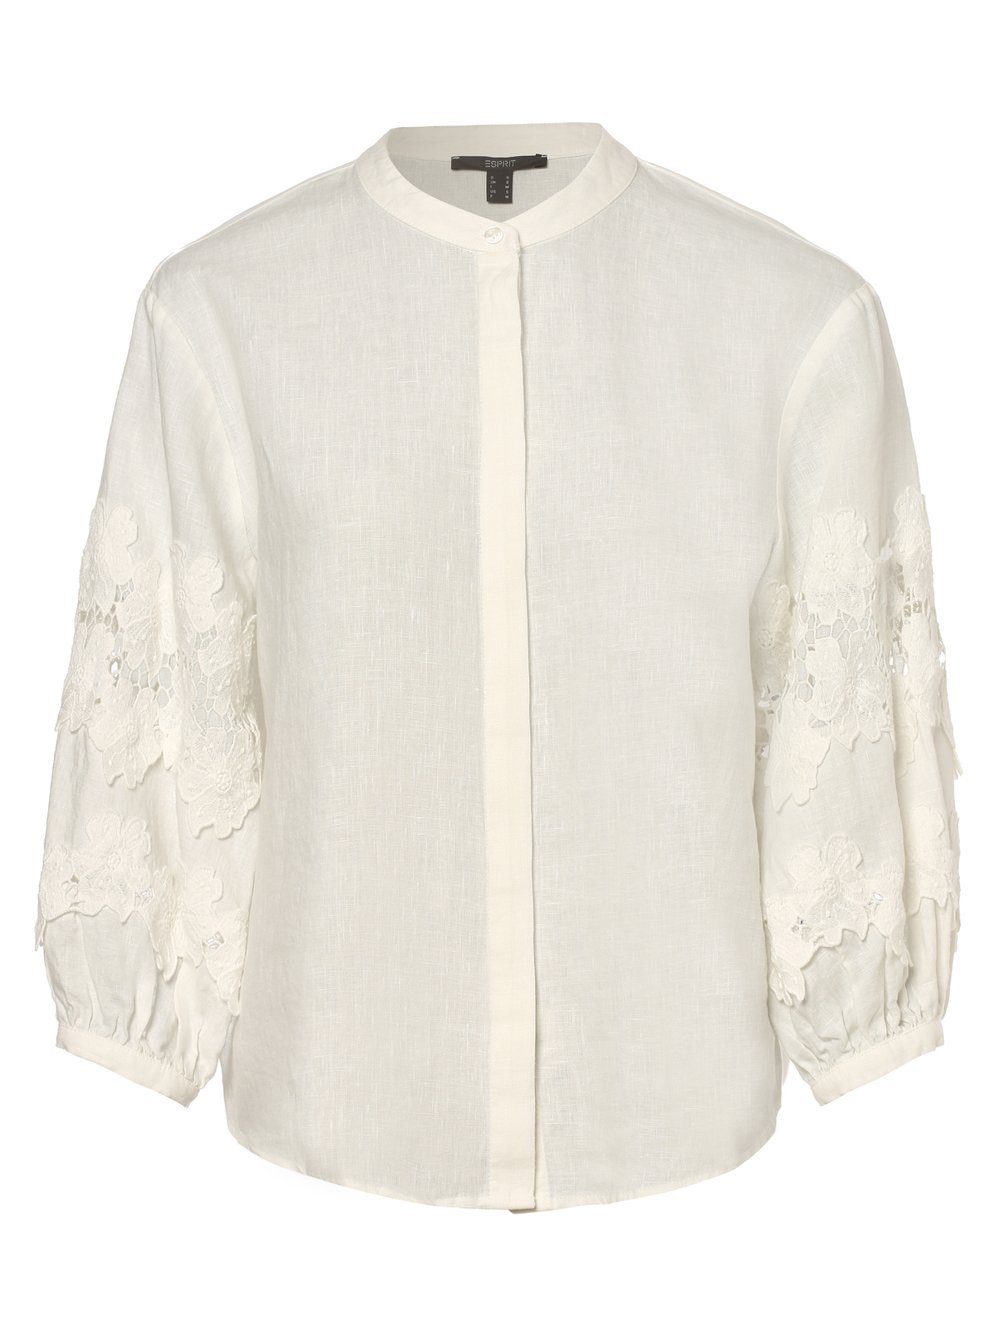 Esprit Collection - Damska bluzka lniana, biały Esprit Collection